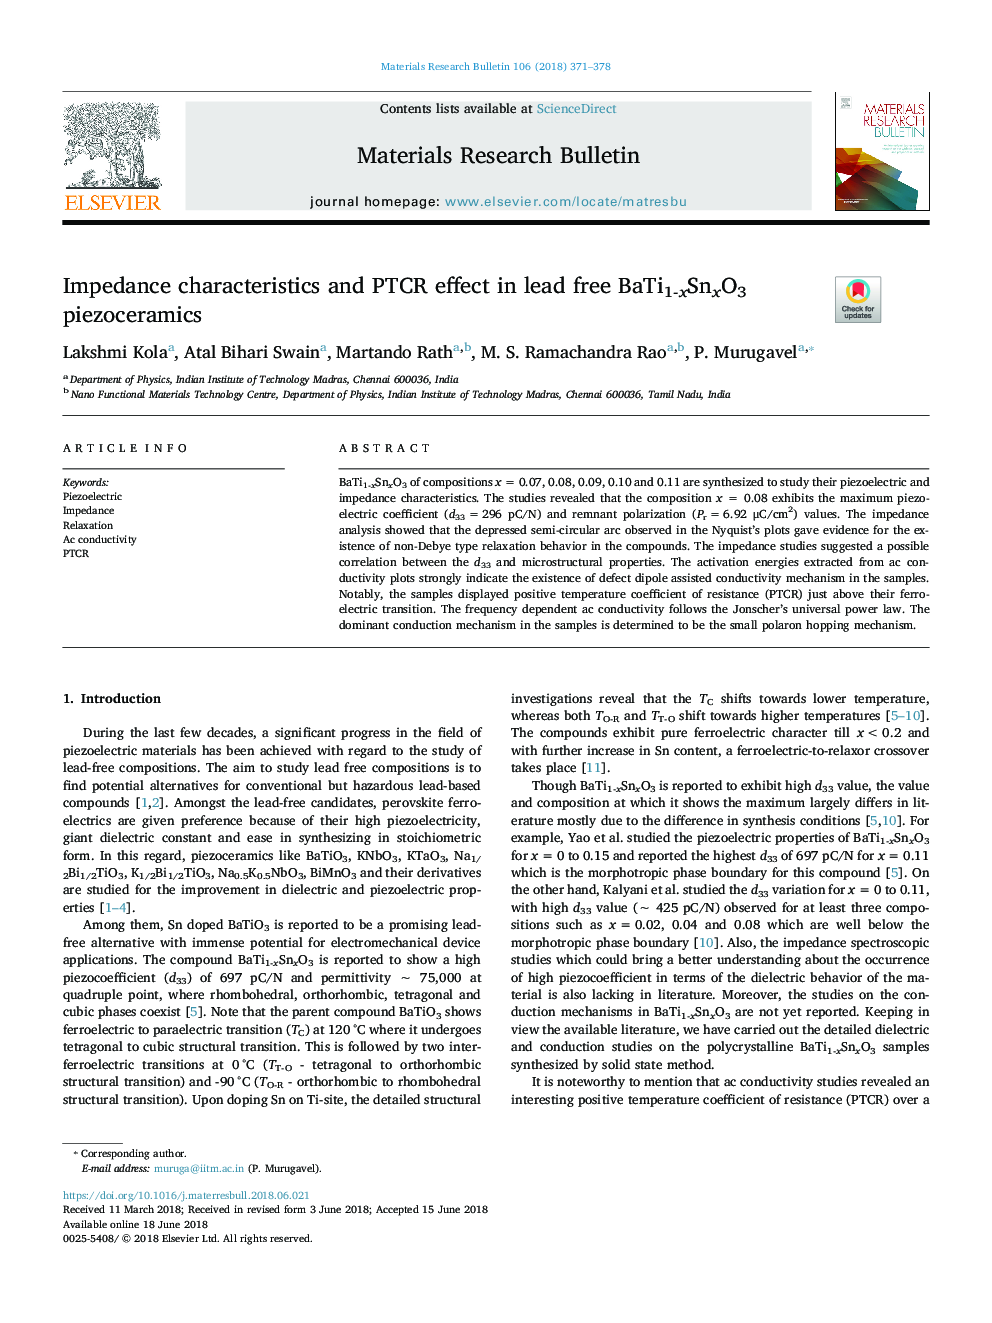 Impedance characteristics and PTCR effect in lead free BaTi1-xSnxO3 piezoceramics